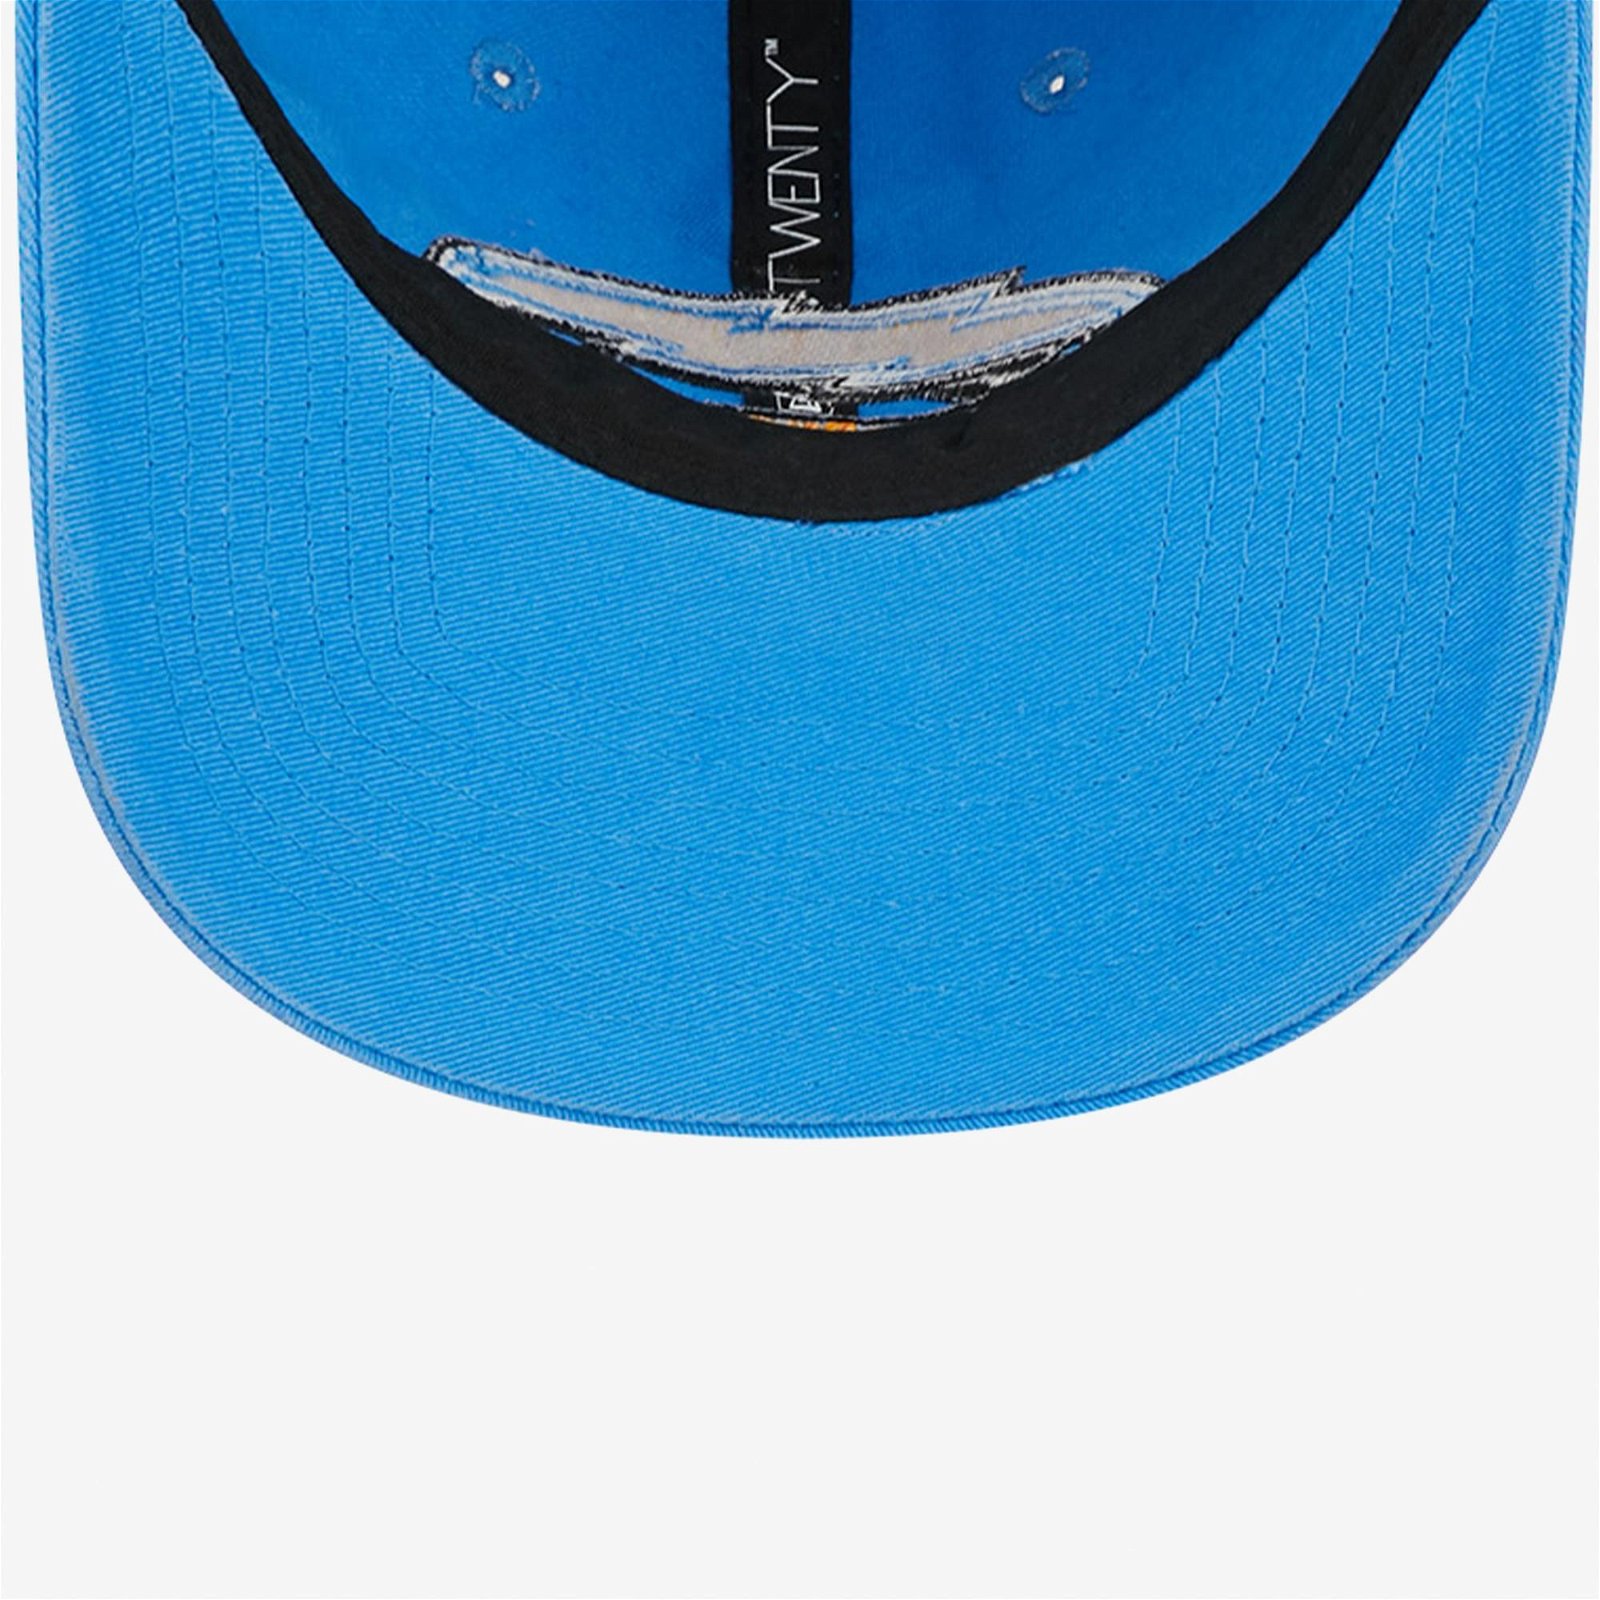 New Era LA Chargers NFL Sideline Unisex Mavi Şapka